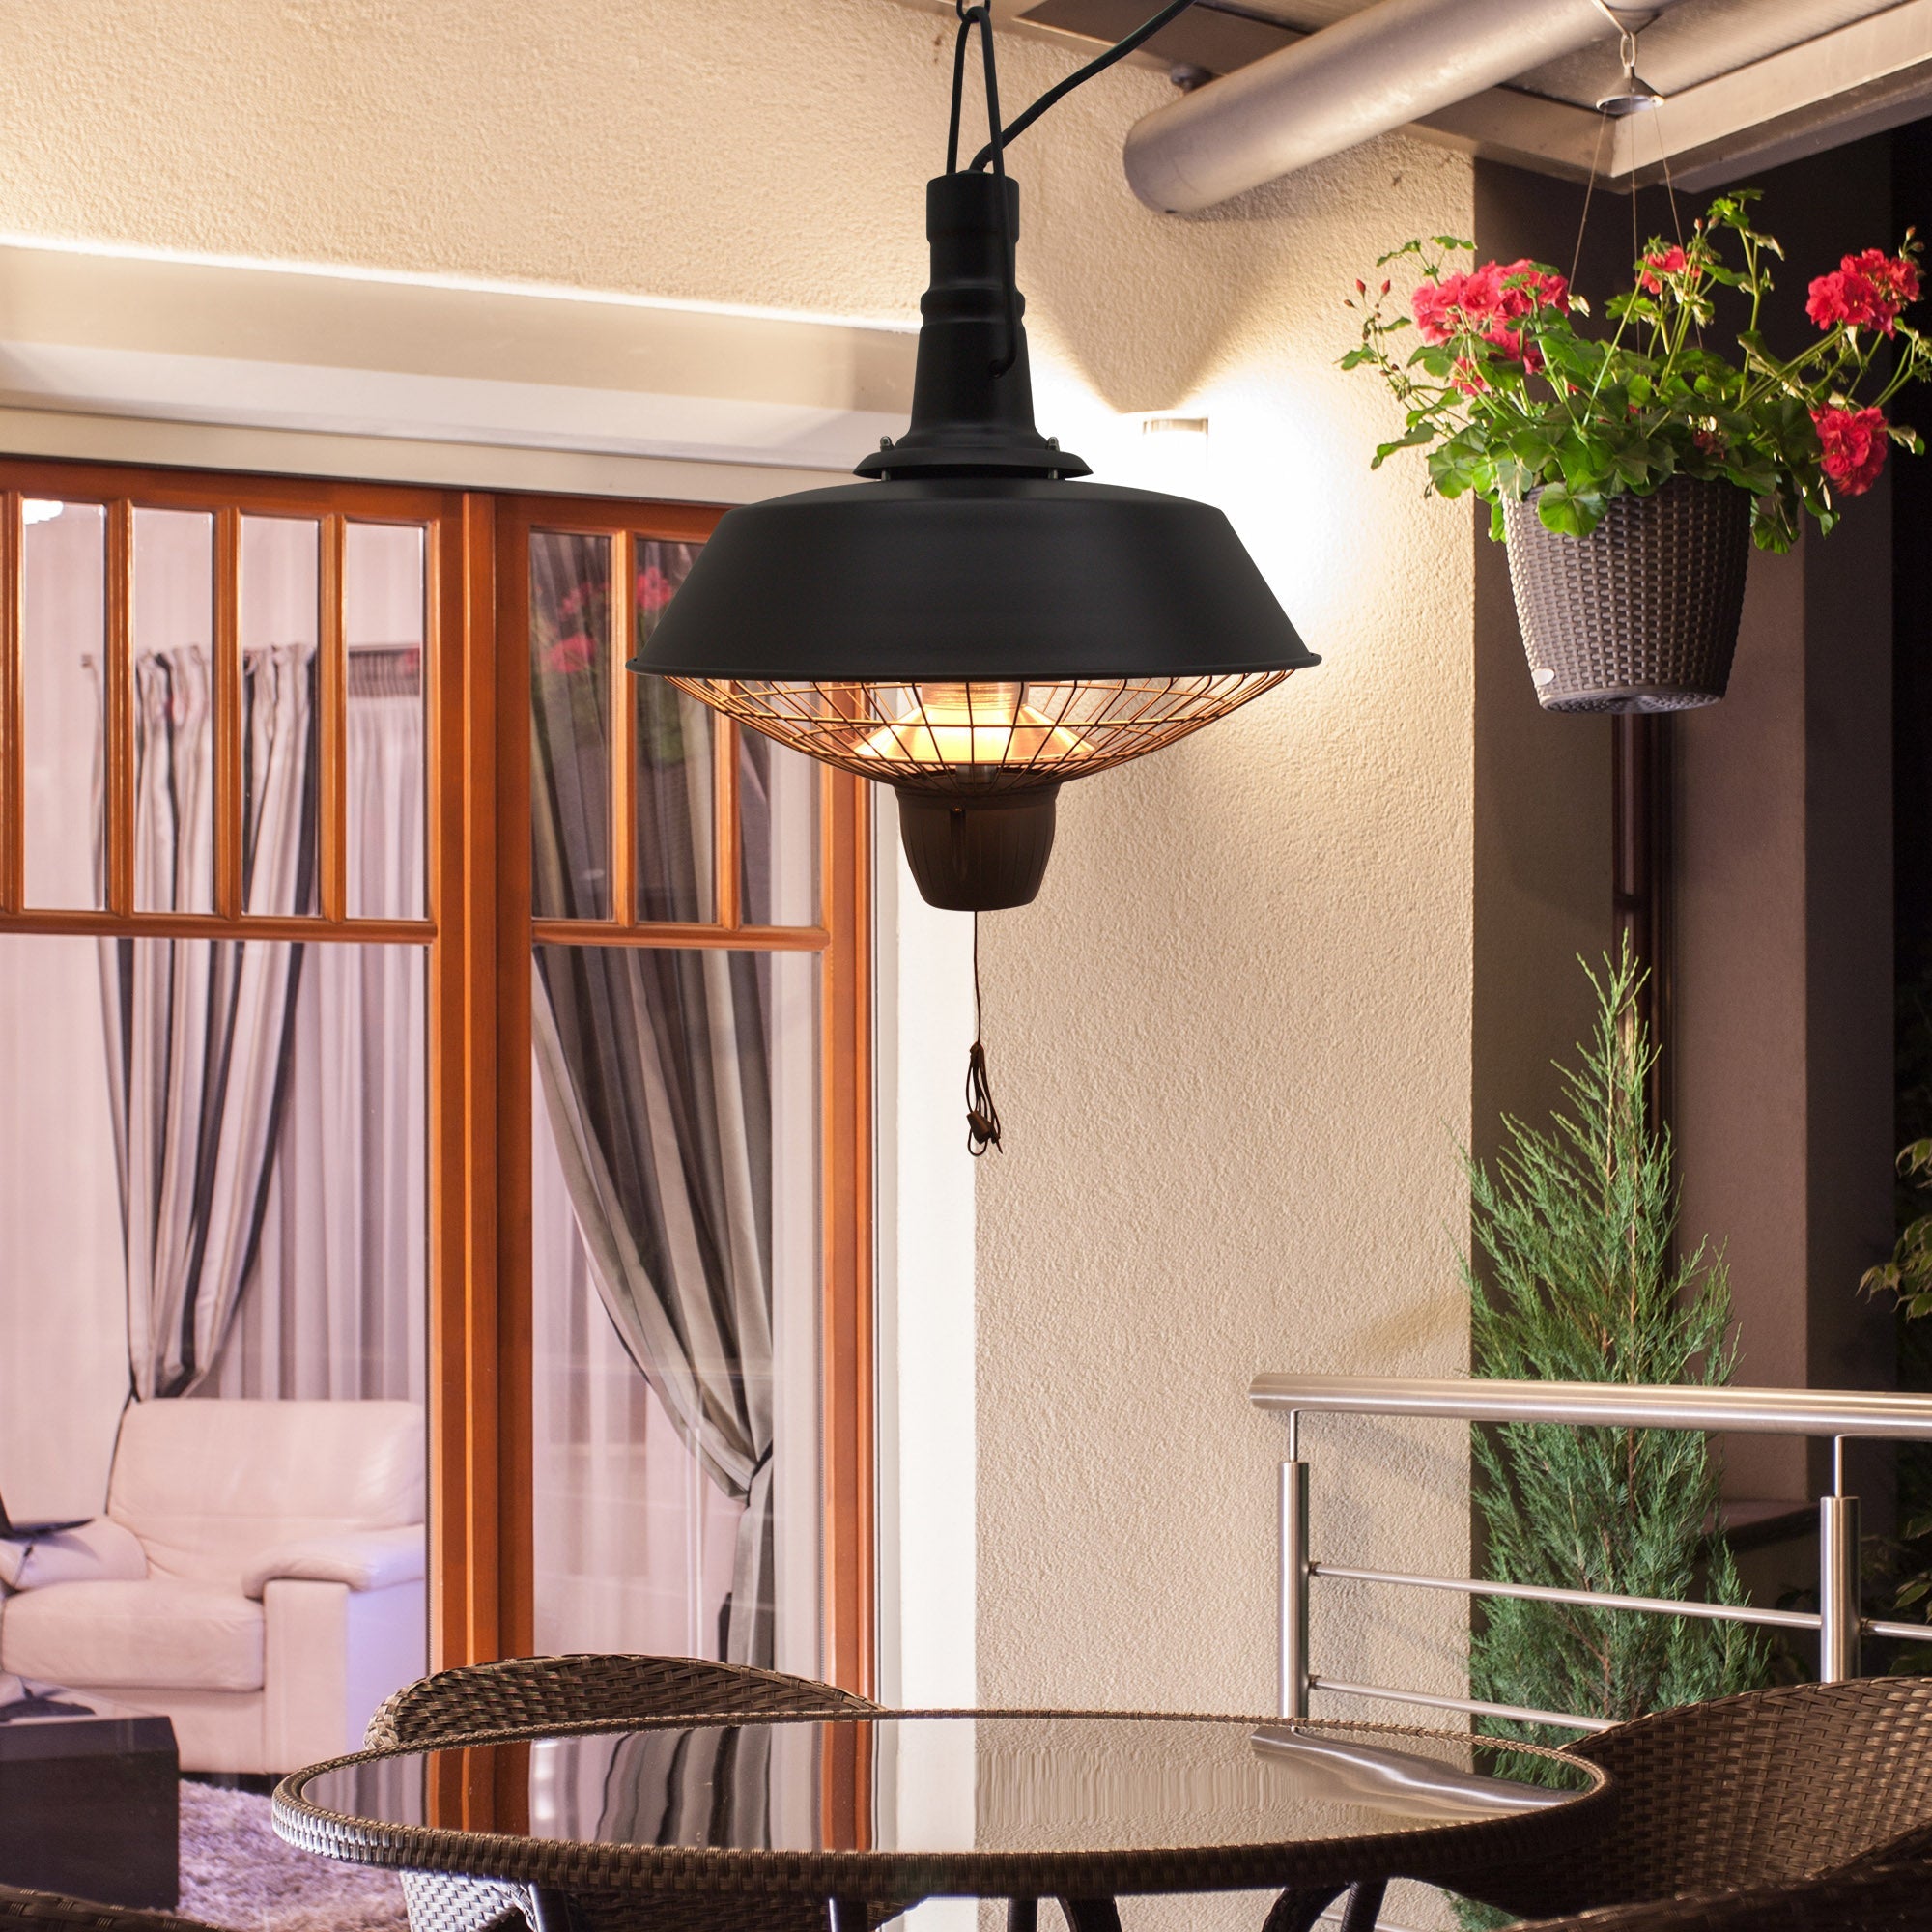 2100W Outdoor Ceiling Mounted Halogen Electric Heater Hanging Patio Garden Warmer Light - Black-1